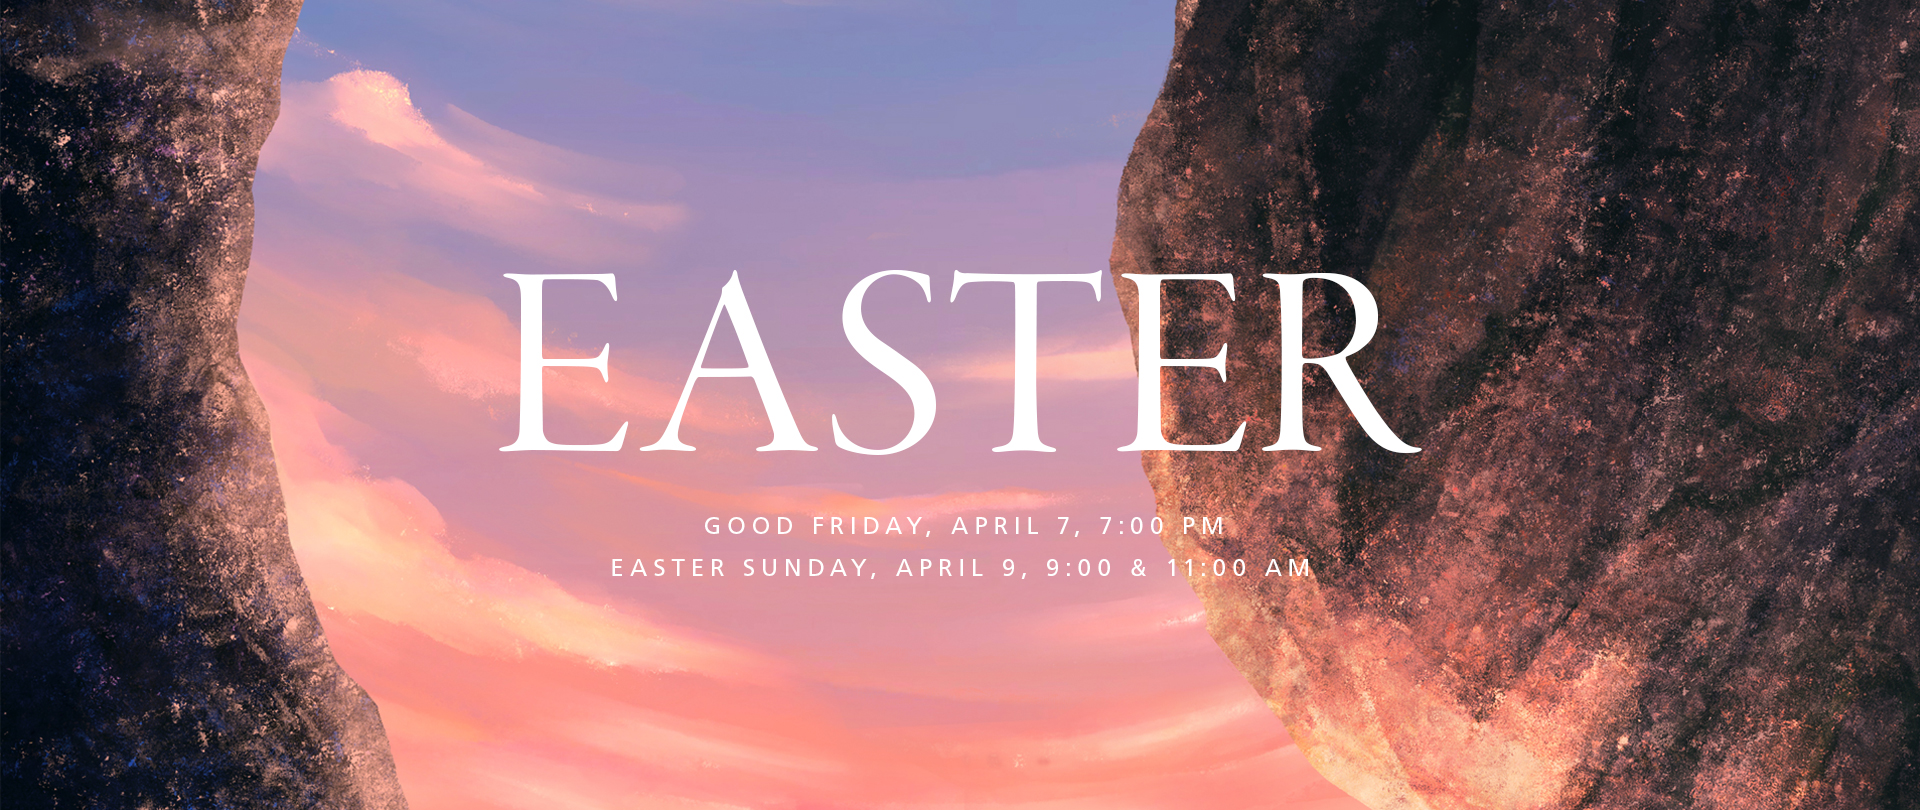 CELEBRATE EASTER
Easter Sunday, April 9, 9:00 & 11:00 AM
Good Friday, April 7, 7:00 PM
